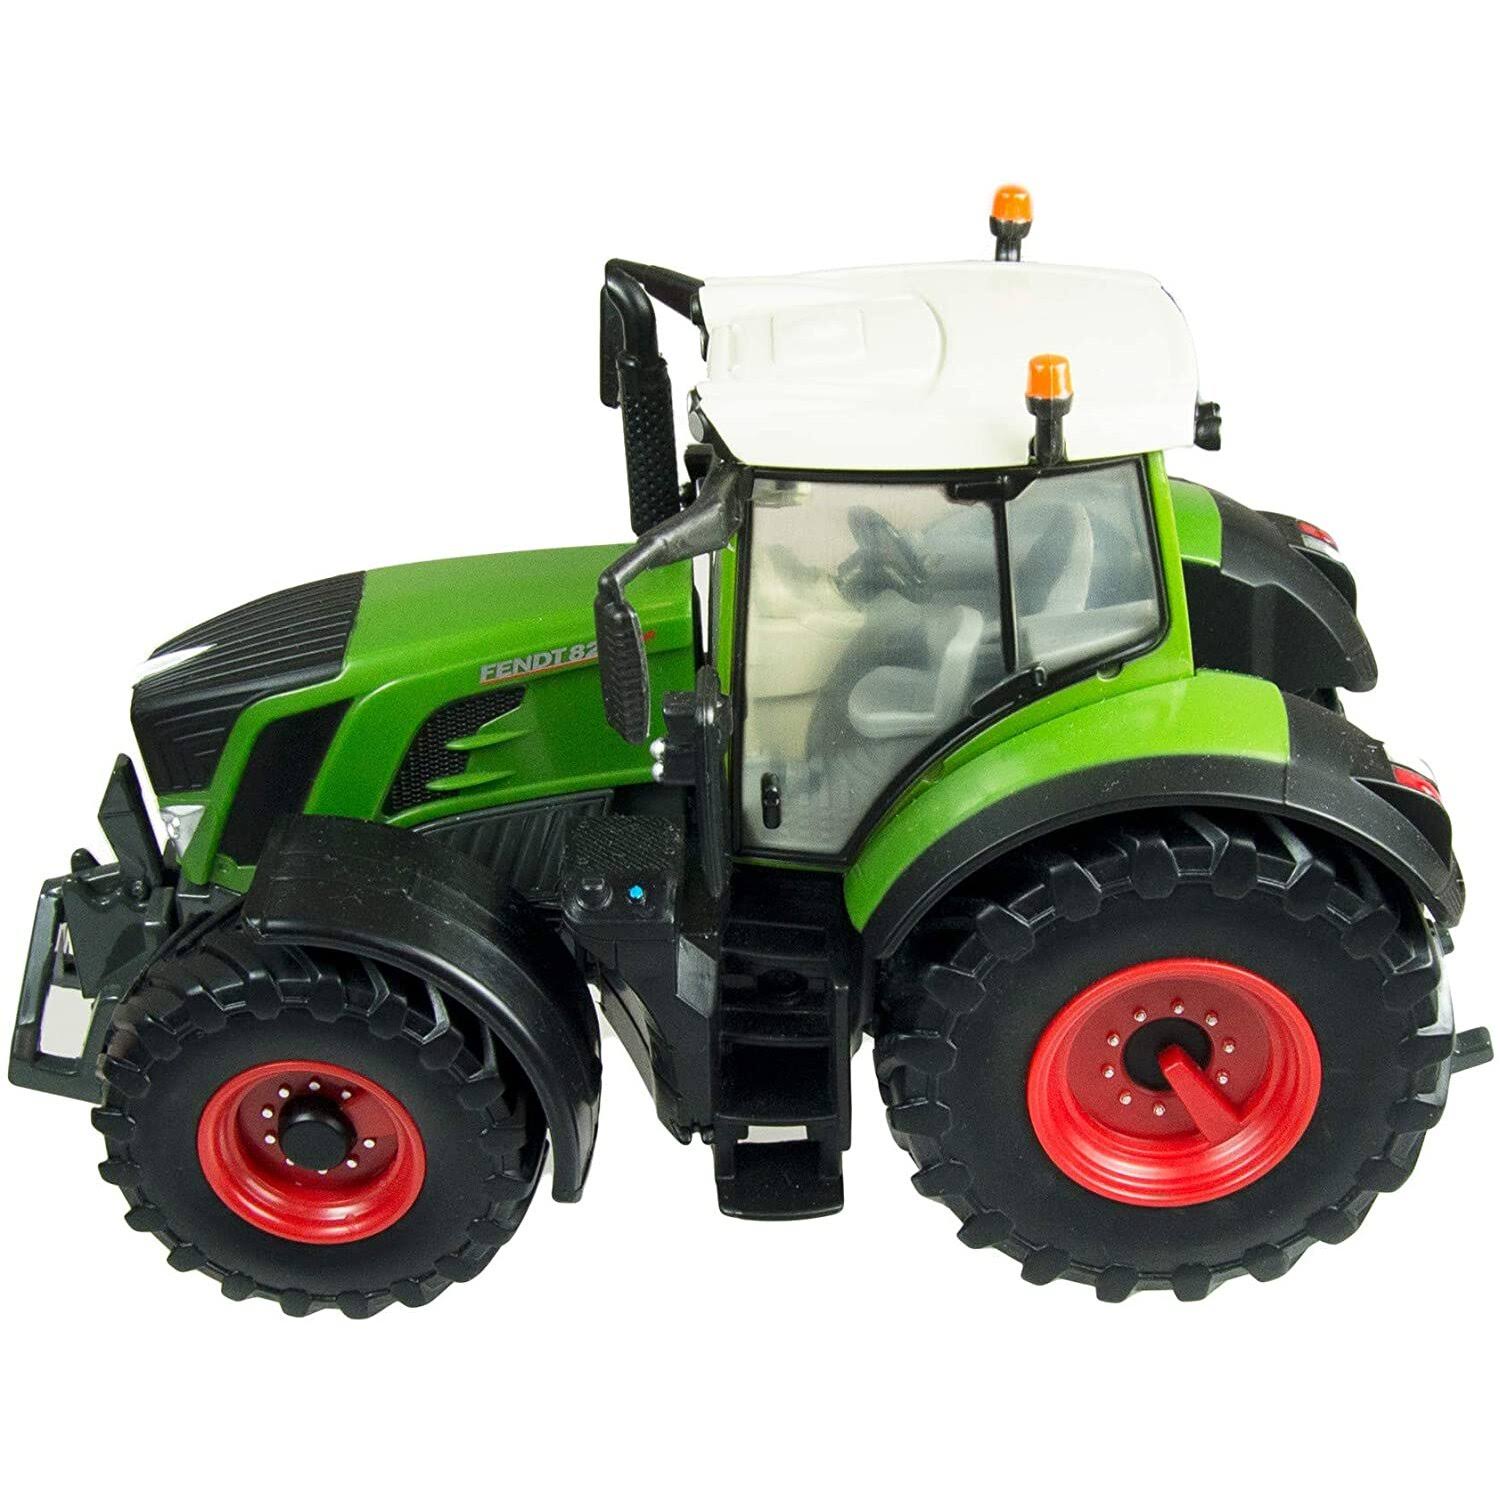 Siku 3285 Model Toy Fendt 724 Vario Tractor 1:32 Scale Replica Model Farm Toy 